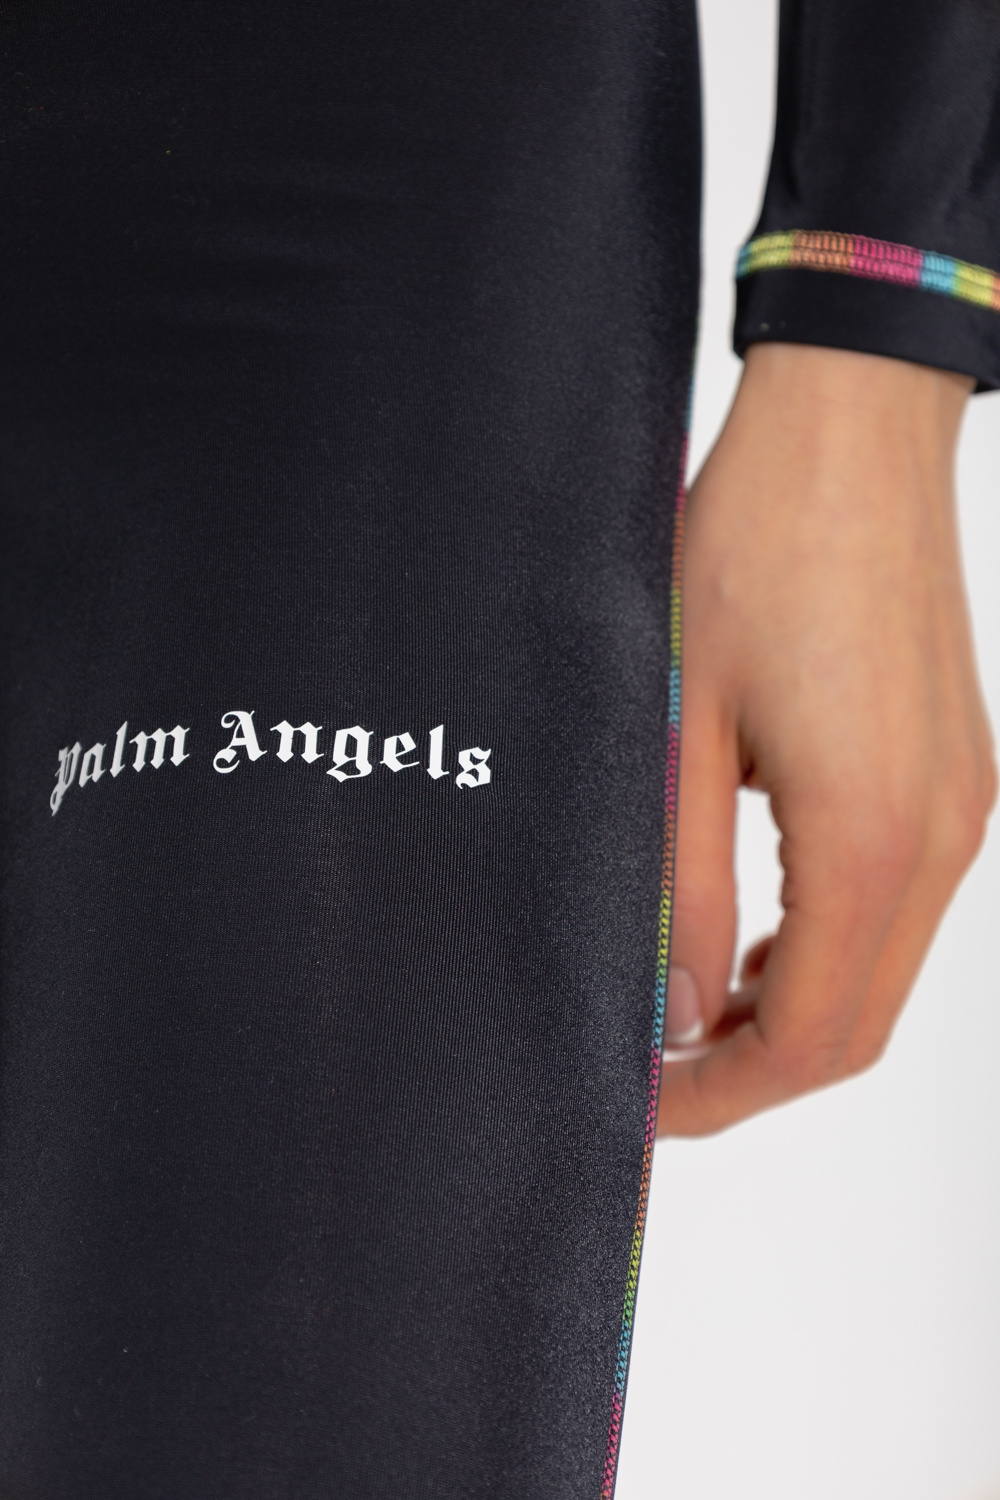 Palm Angels Training leggings with logo